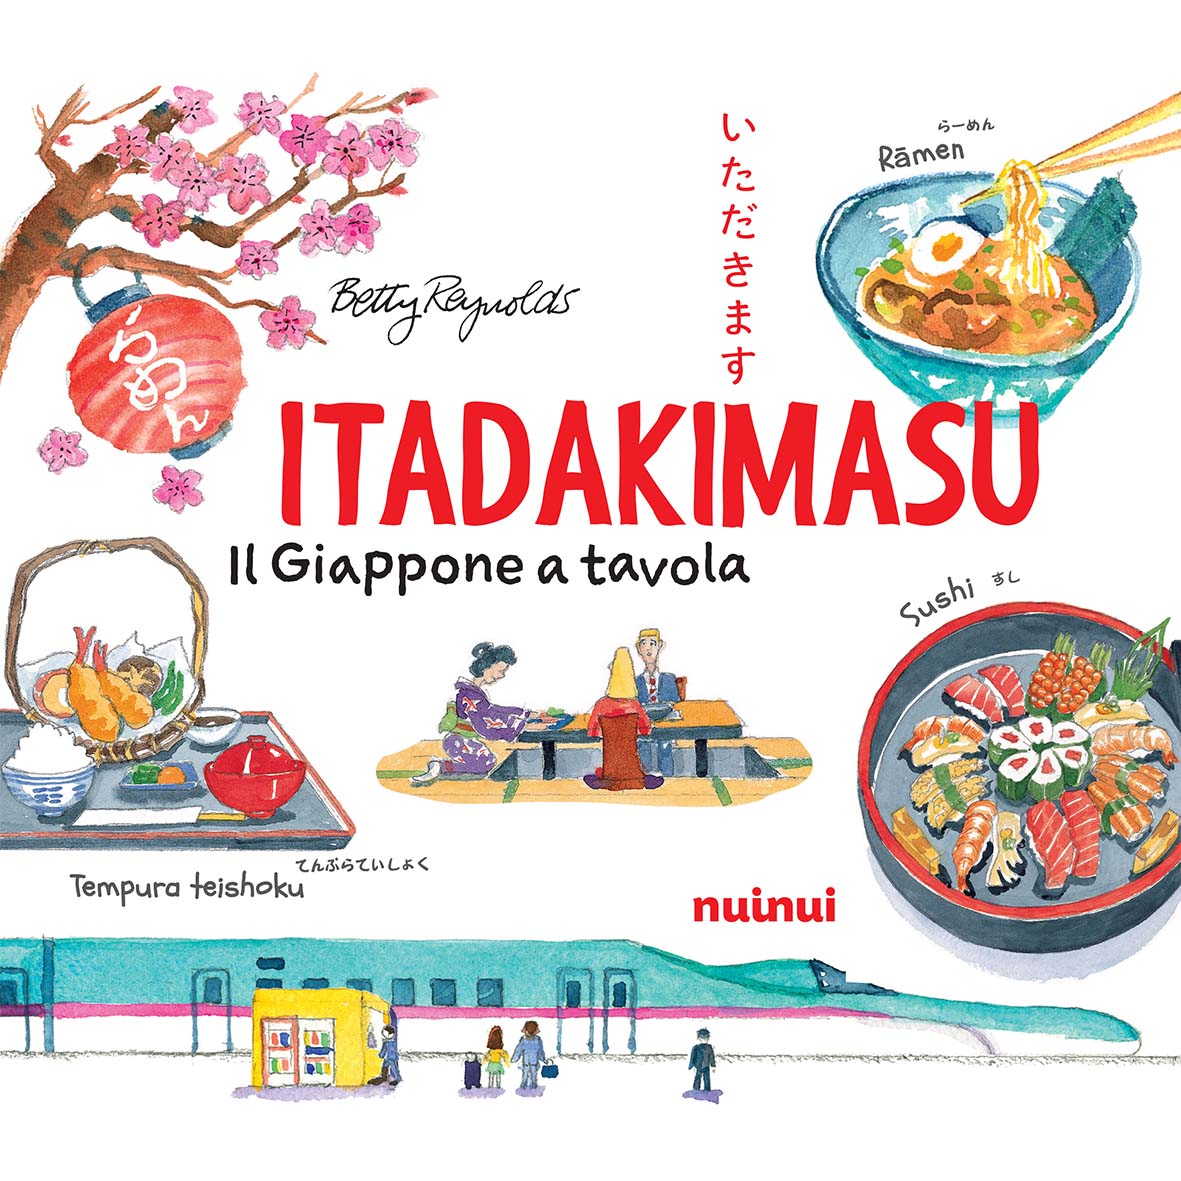 Itadakimasu - Japan at the table